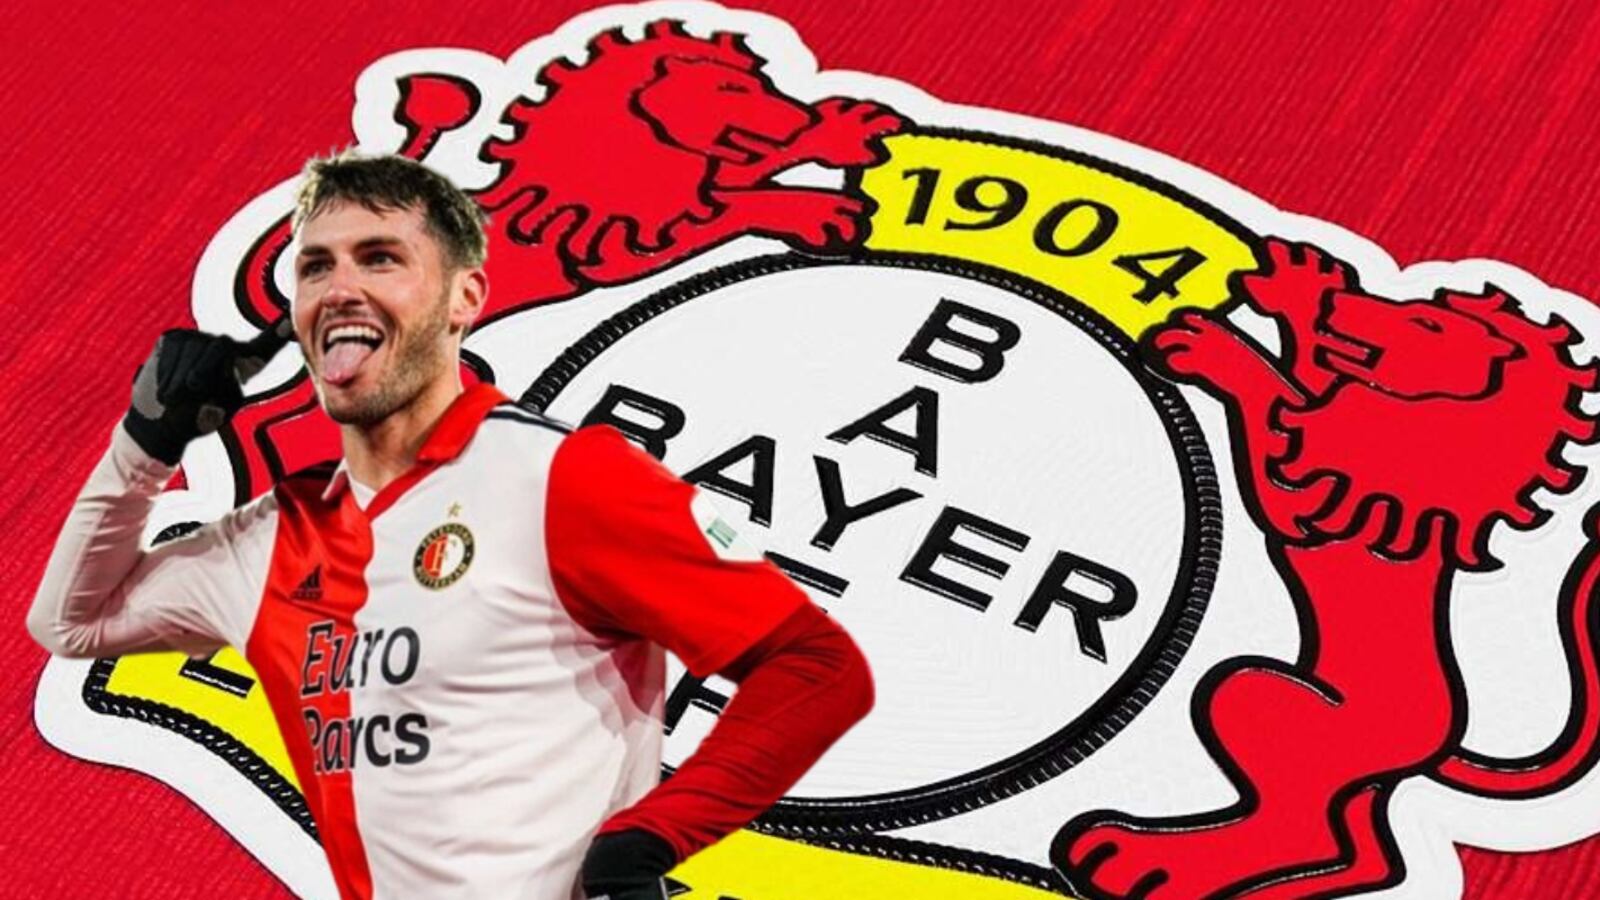 Tiembla Europa, Santi Giménez recibe buenas noticias gracias al Bayer Leverkusen